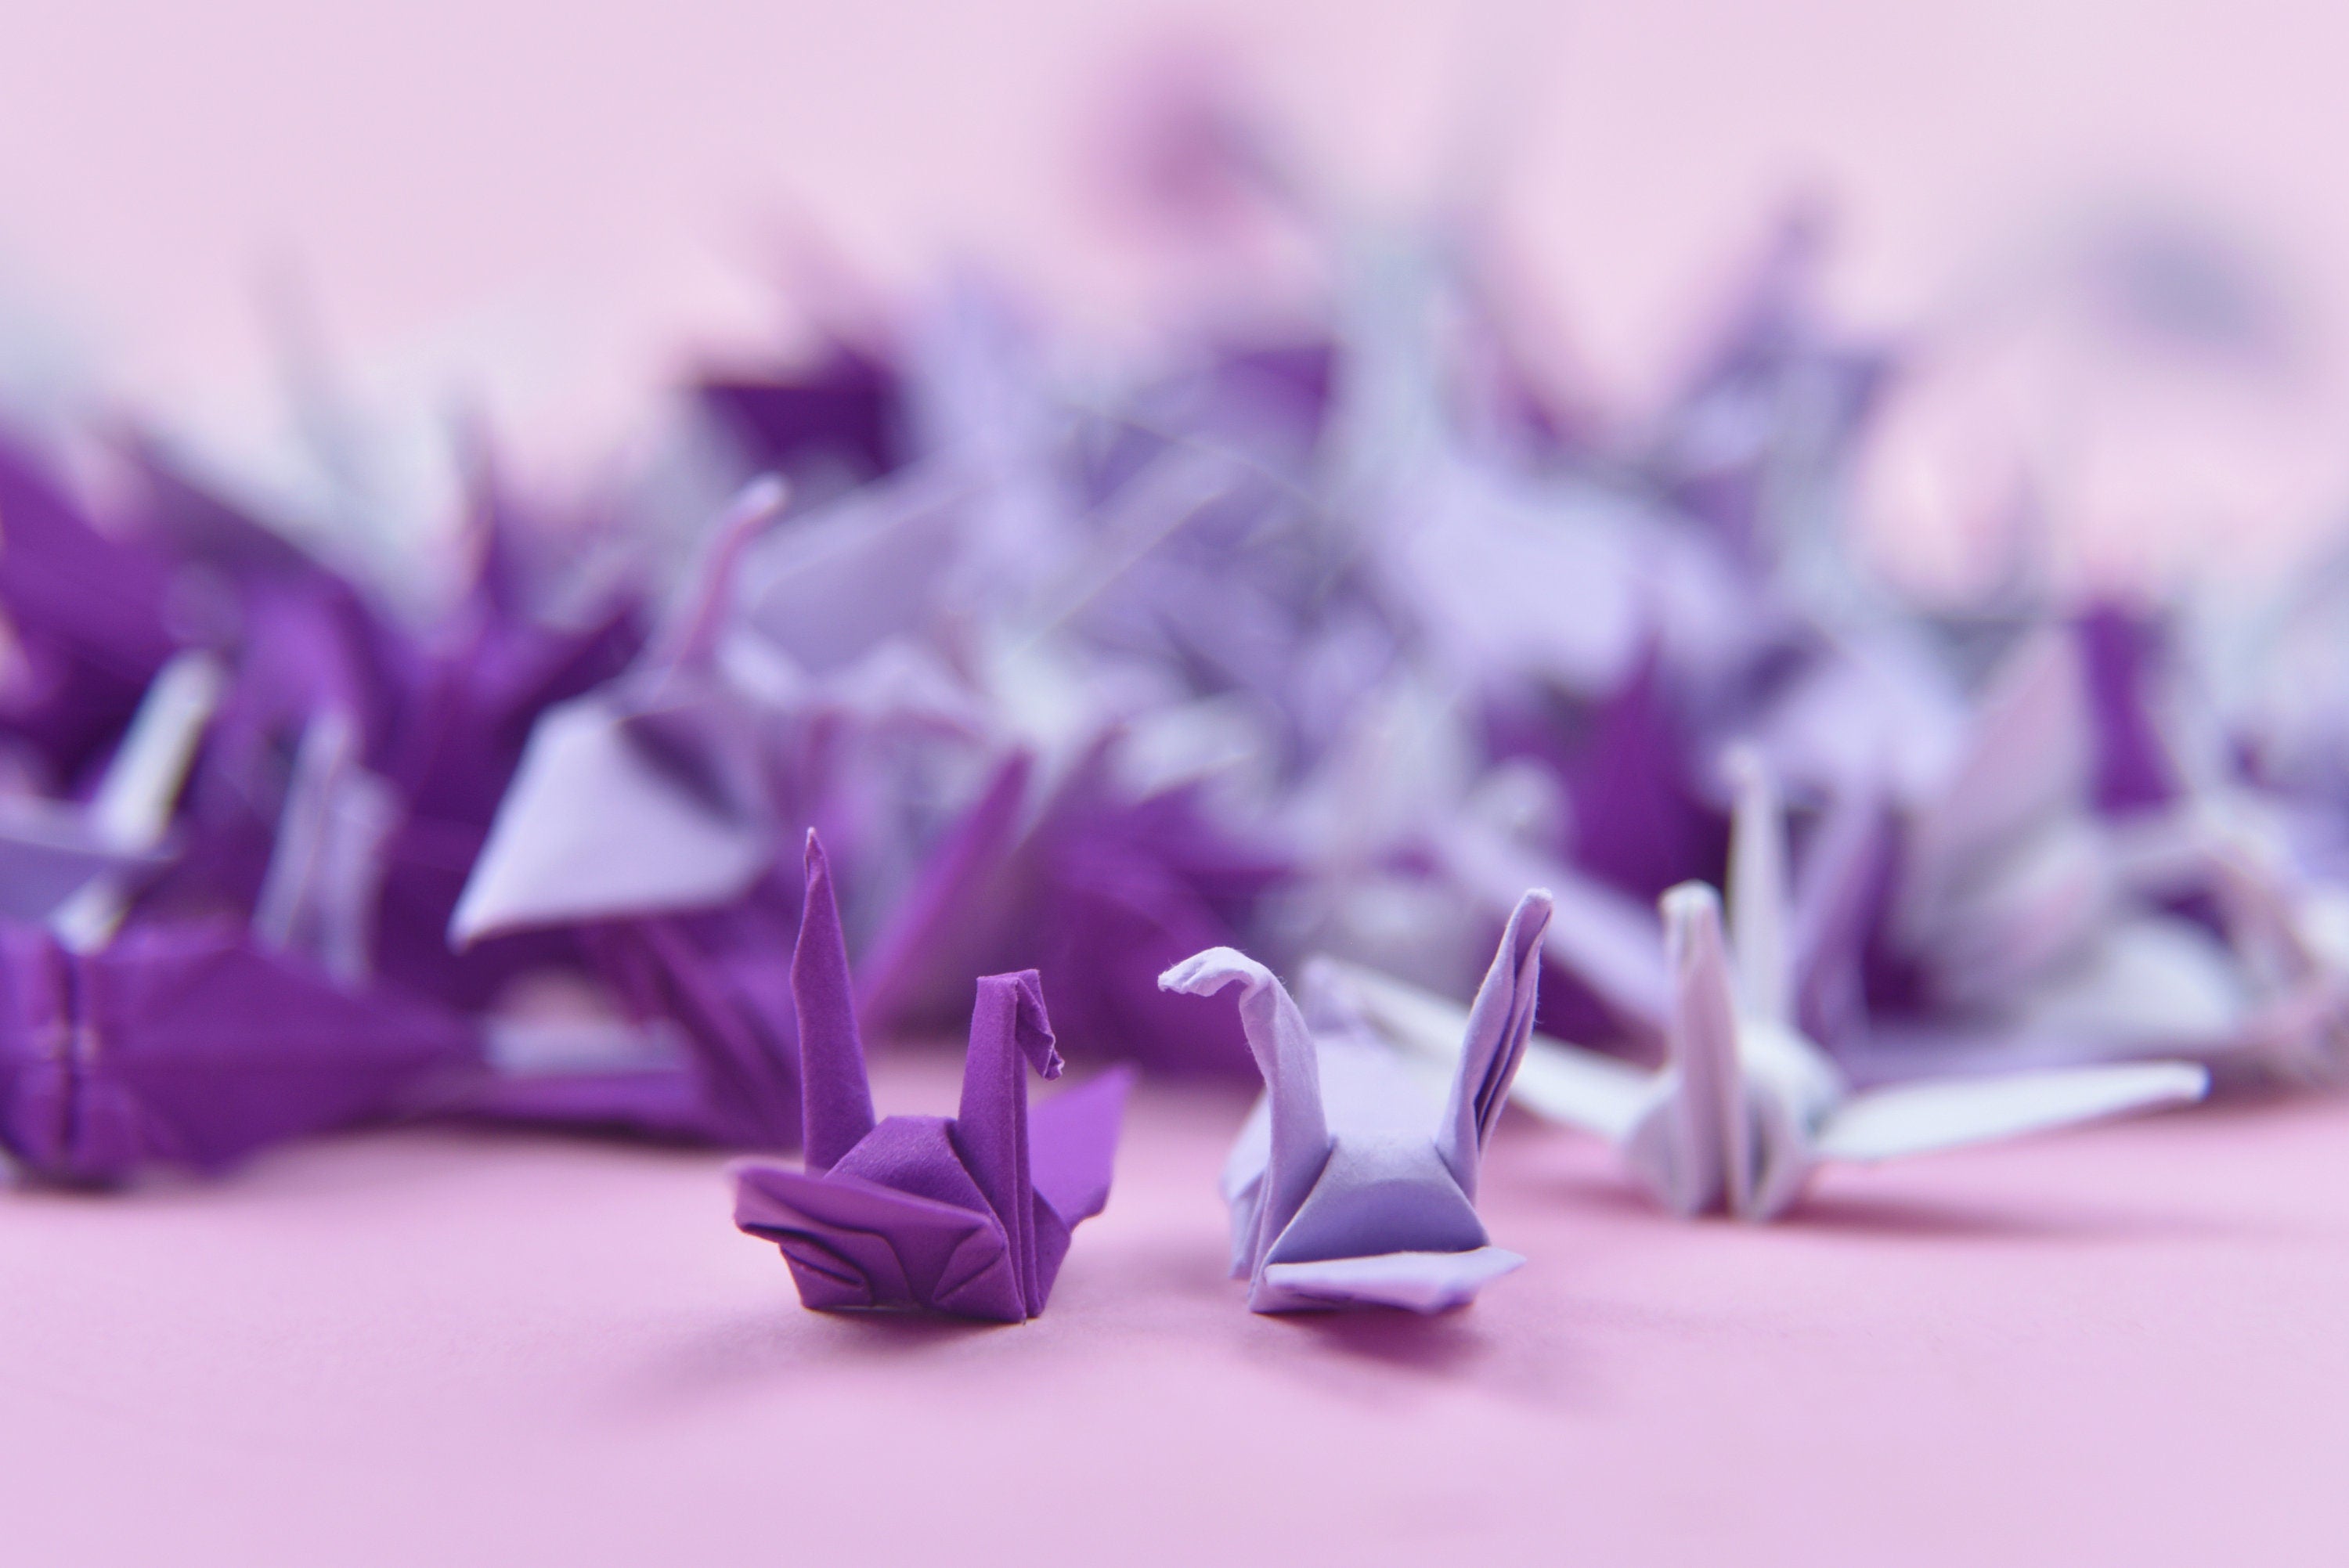 1000 gru di carta origami tonalità viola - gru origami - prefabbricate - piccole 1,5x1,5 pollici per decorazioni di nozze, regali di anniversario, San Valentino